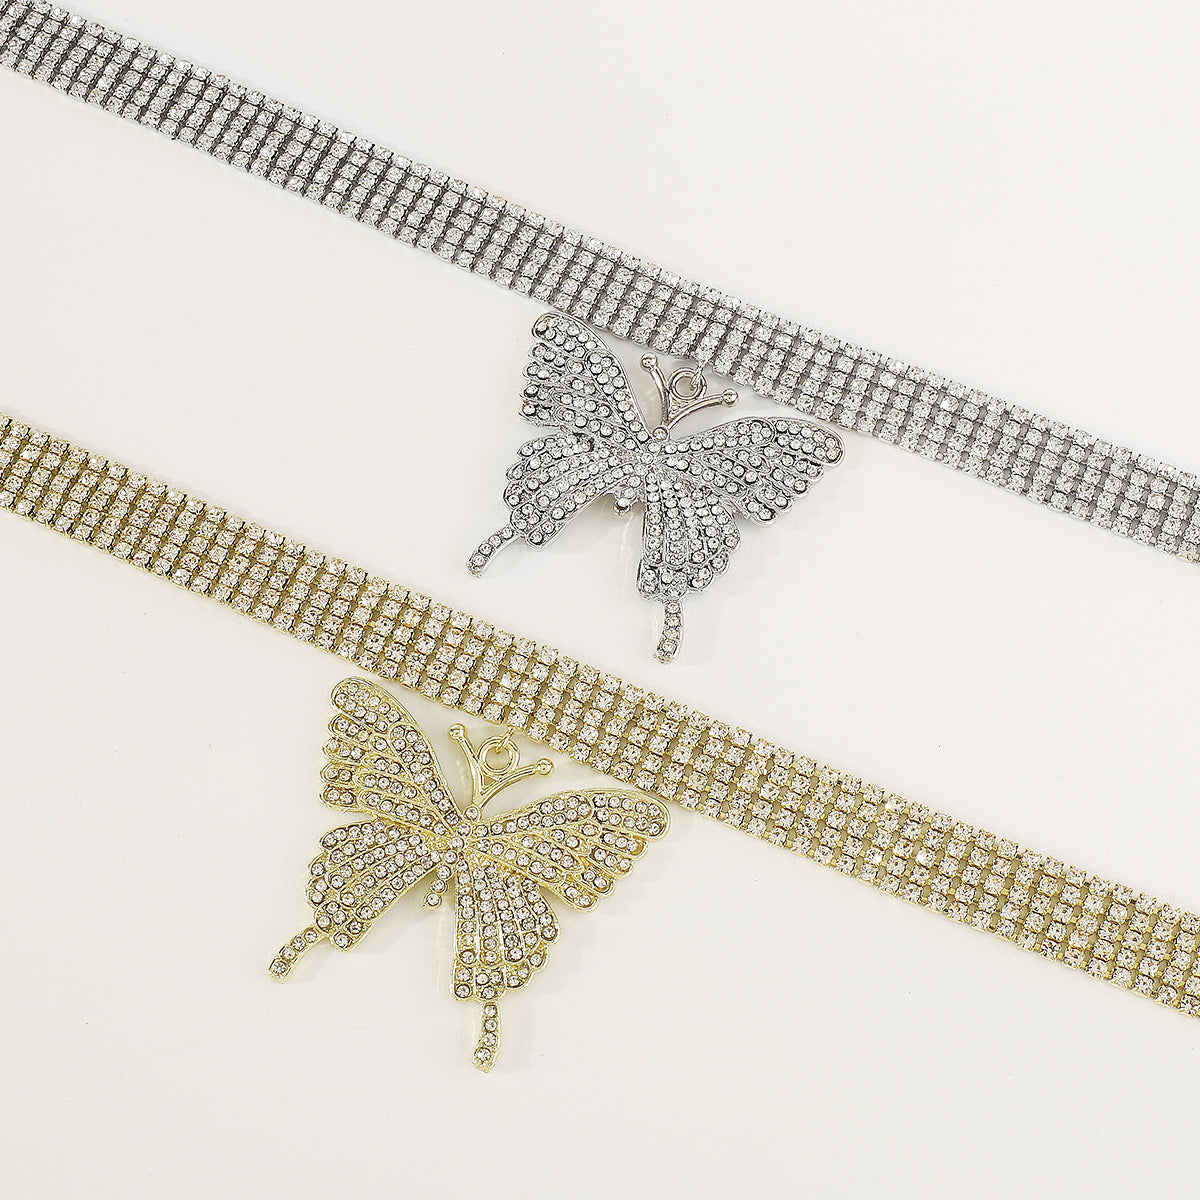 N11231 Trendy Rhinestone Butterfly Pendant Necklace